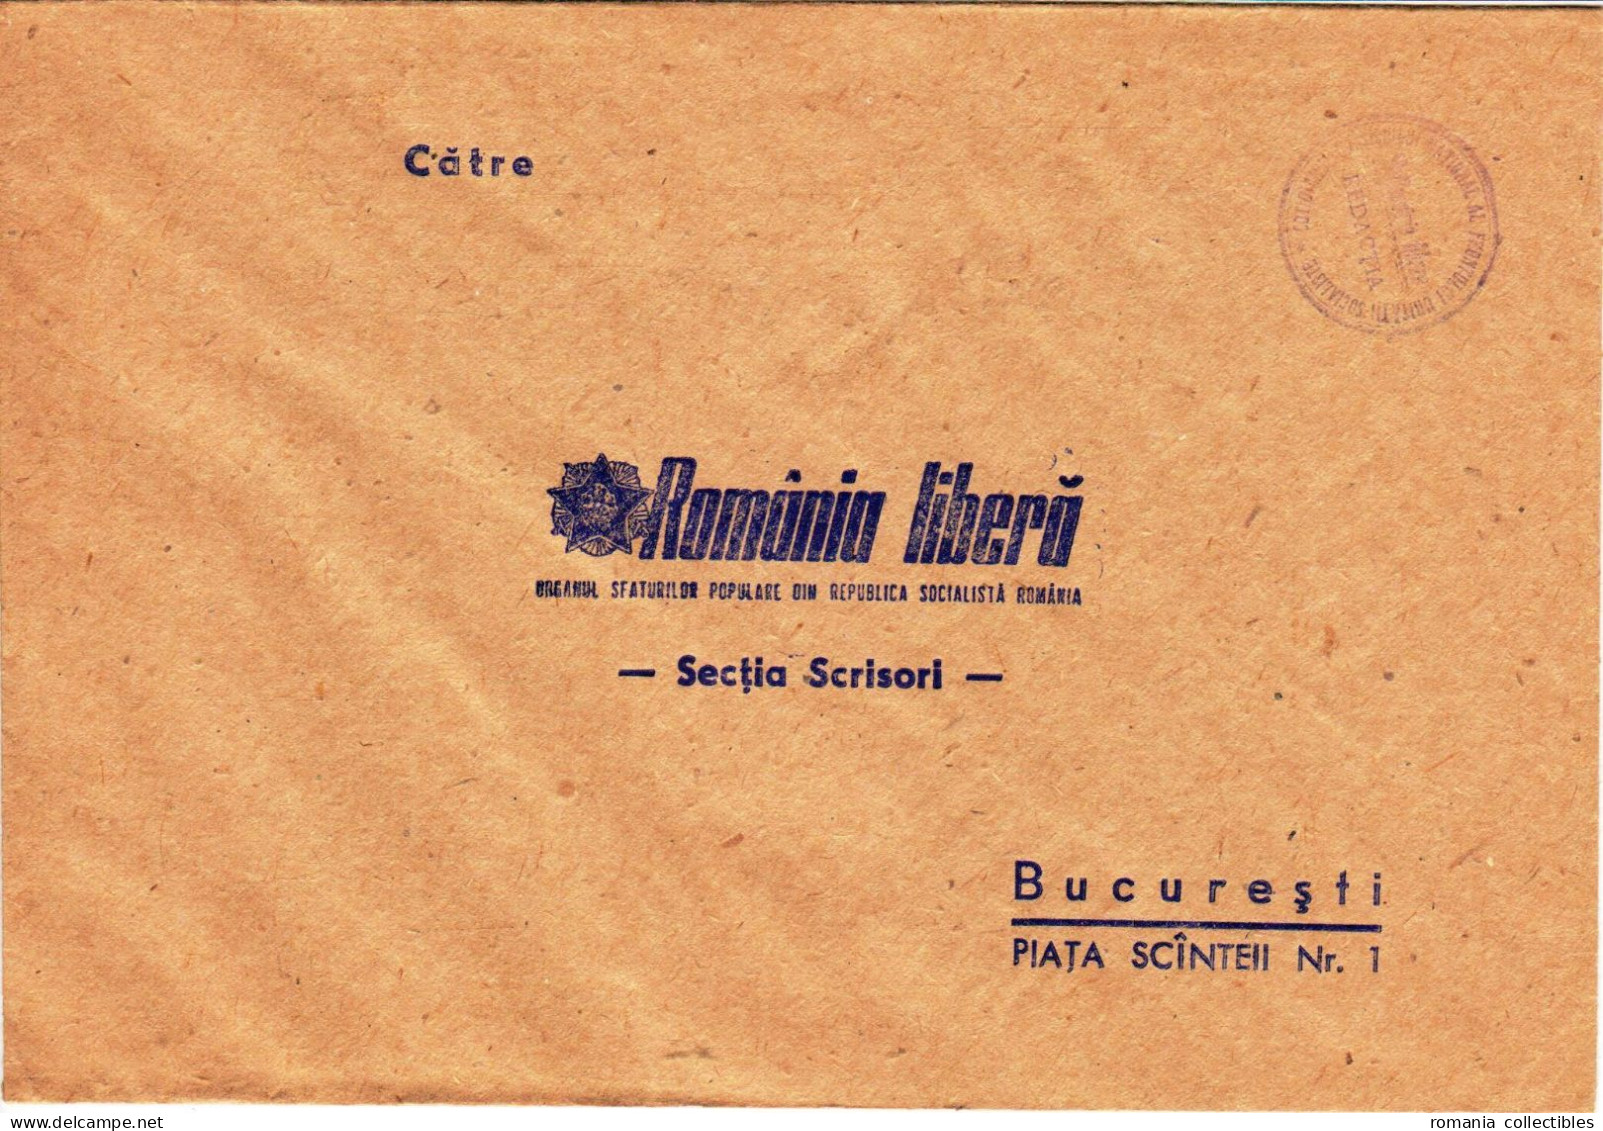 Romania, 1980's, Vintage Uncirculated Postal Cover  - "Romania Libera" Newspaper Advertising - Servizio